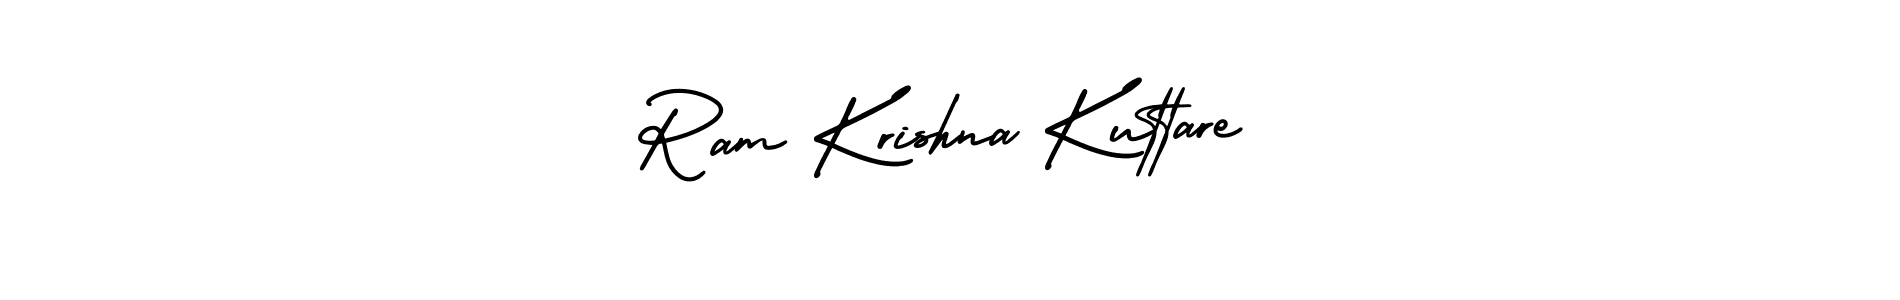 Similarly AmerikaSignatureDemo-Regular is the best handwritten signature design. Signature creator online .You can use it as an online autograph creator for name Ram Krishna Kuttare. Ram Krishna Kuttare signature style 3 images and pictures png